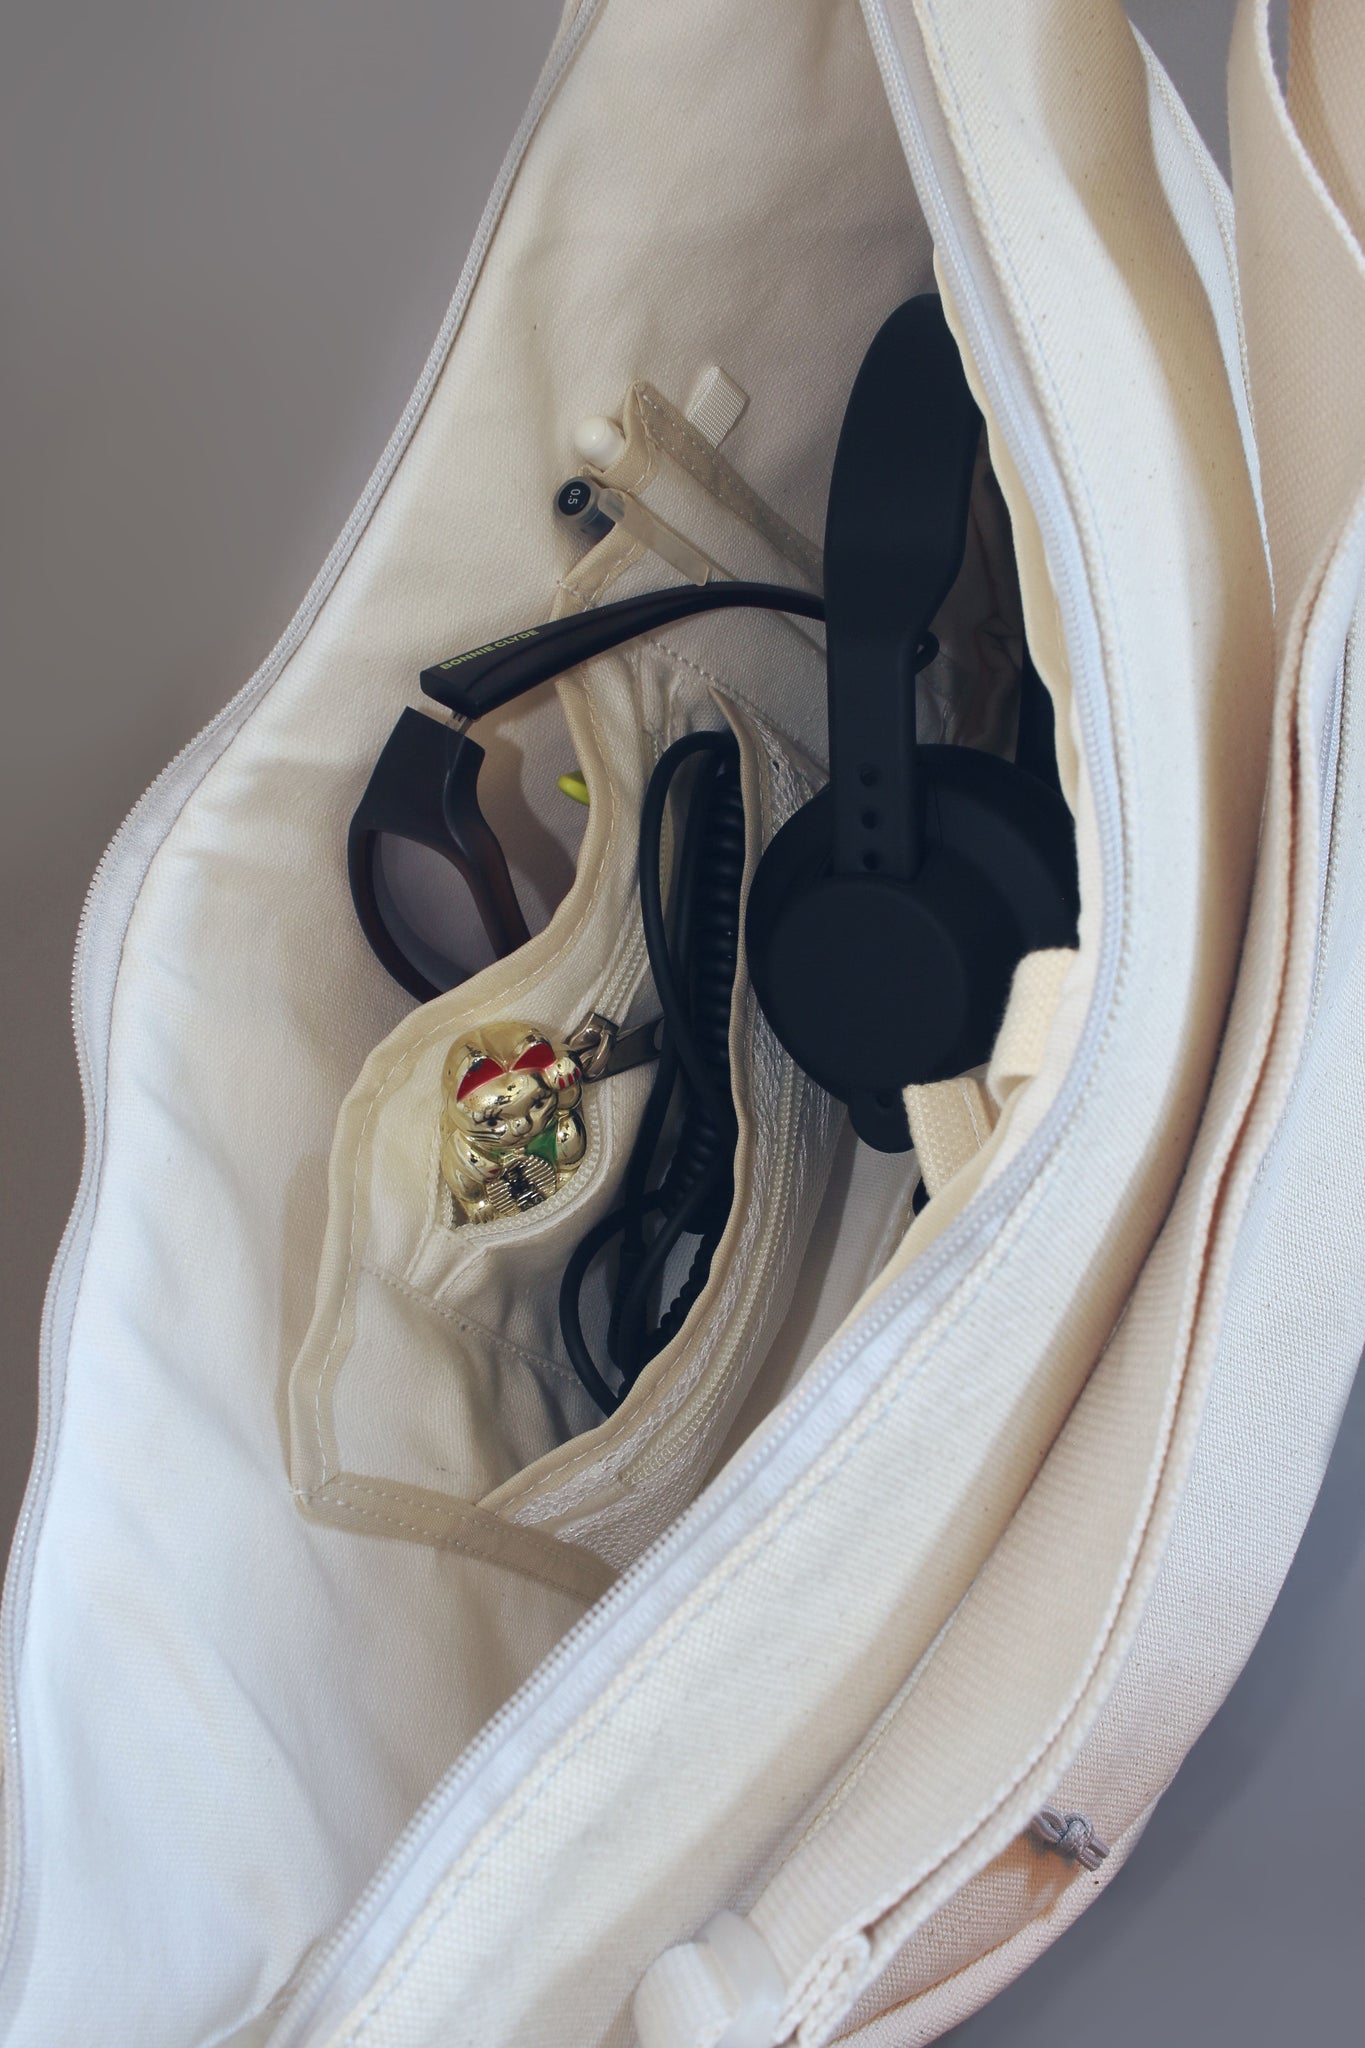 duality crescent bag interior compartment mobile dj accessories